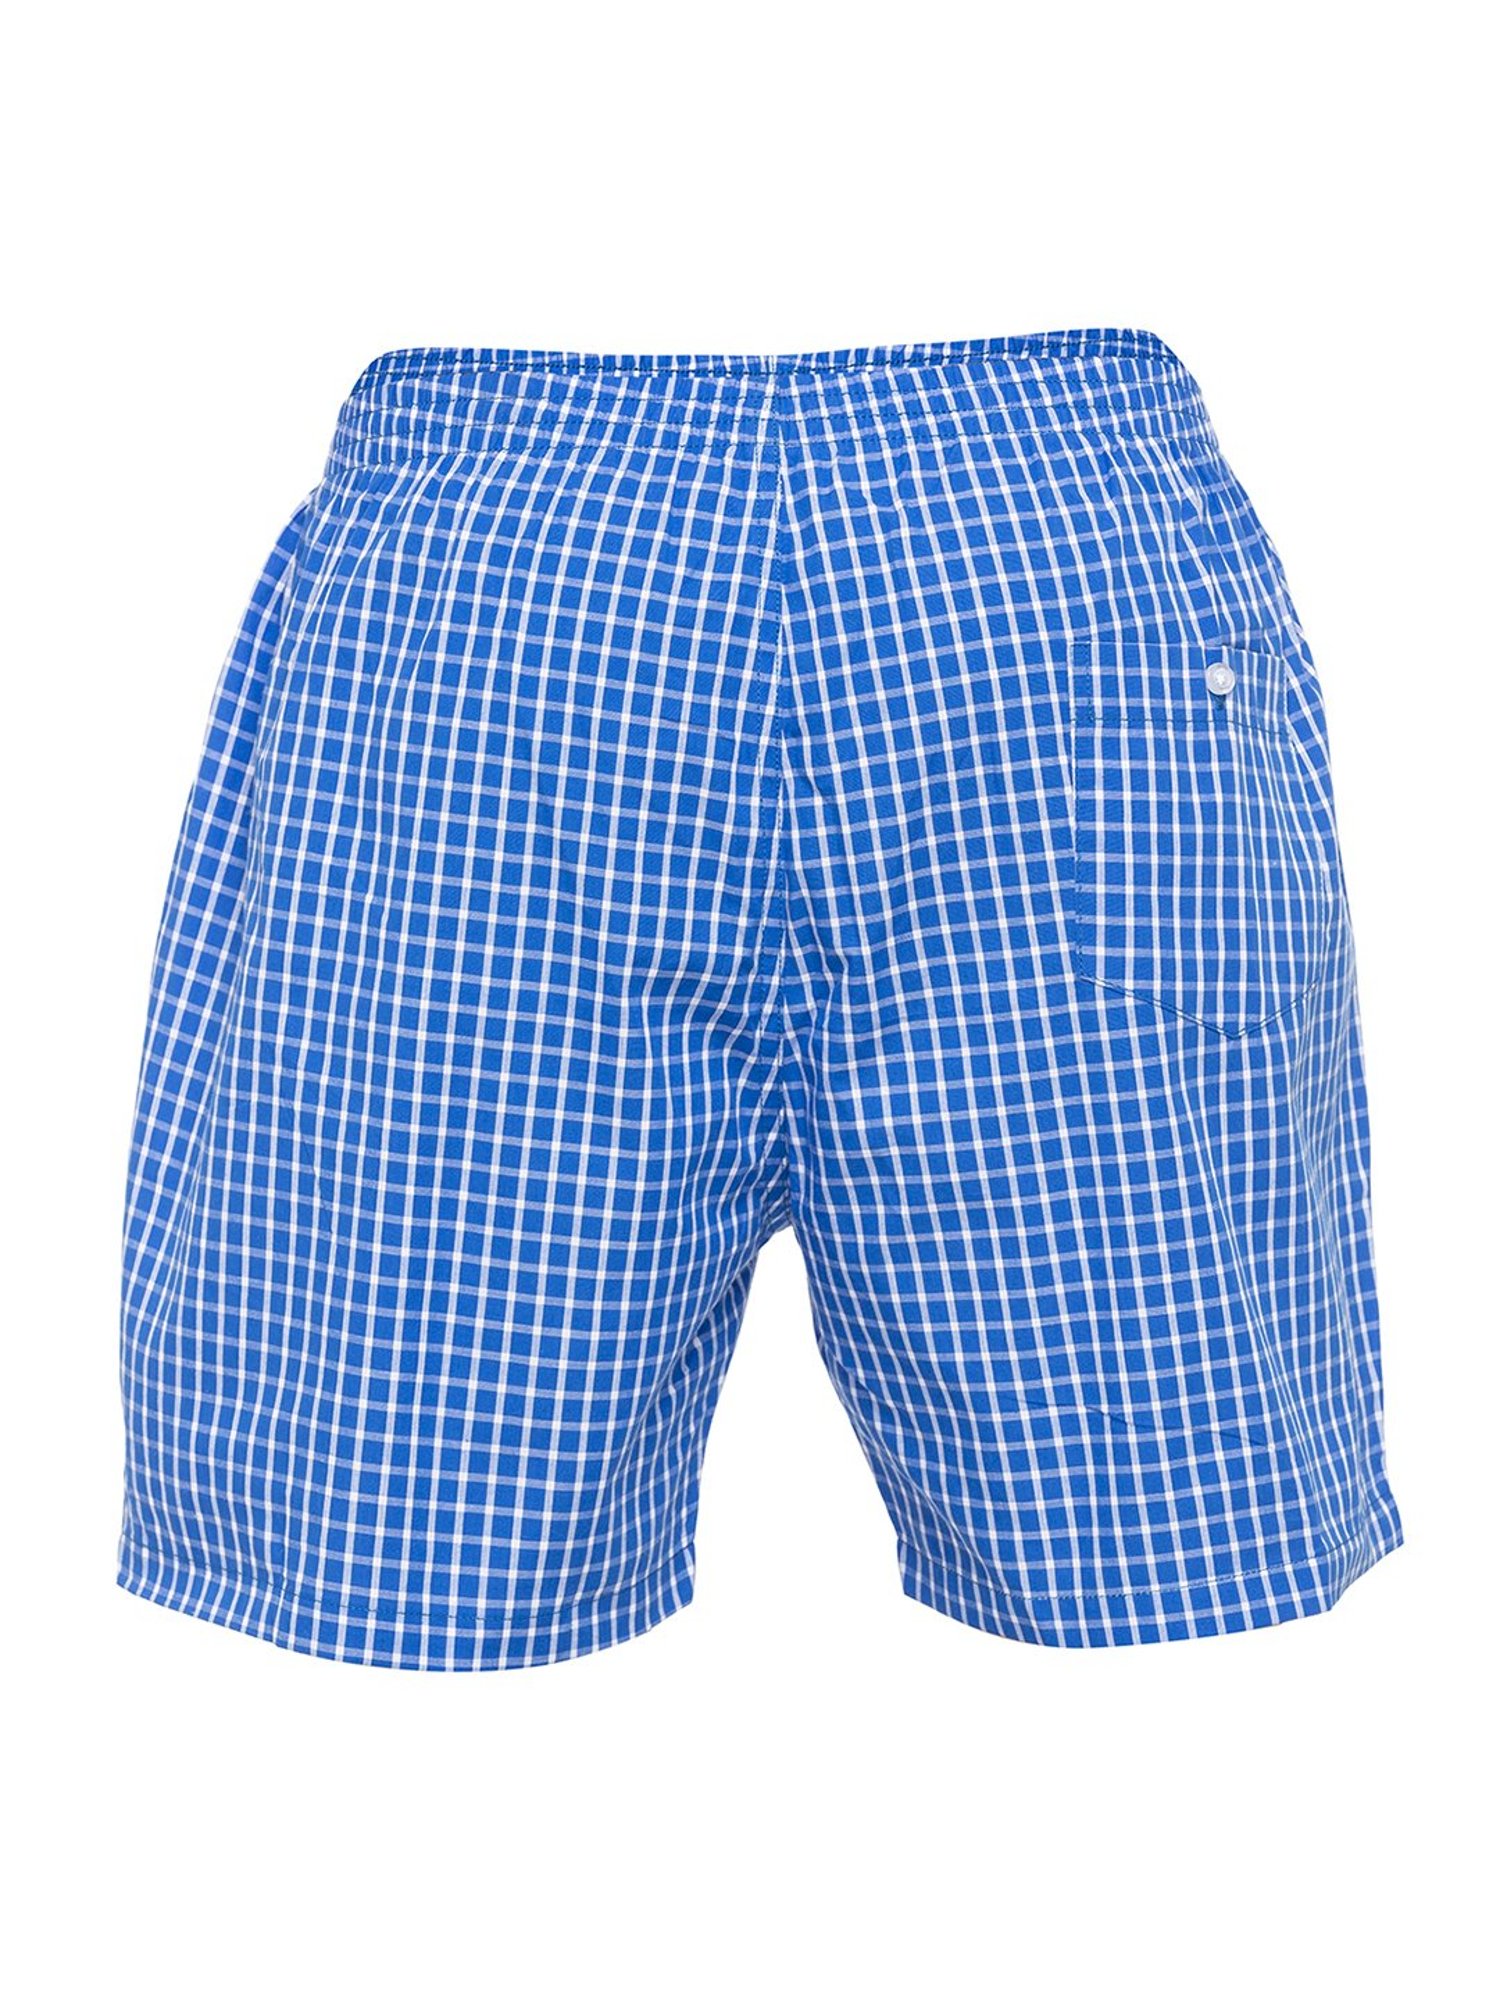 Blue Check Boxer Shorts